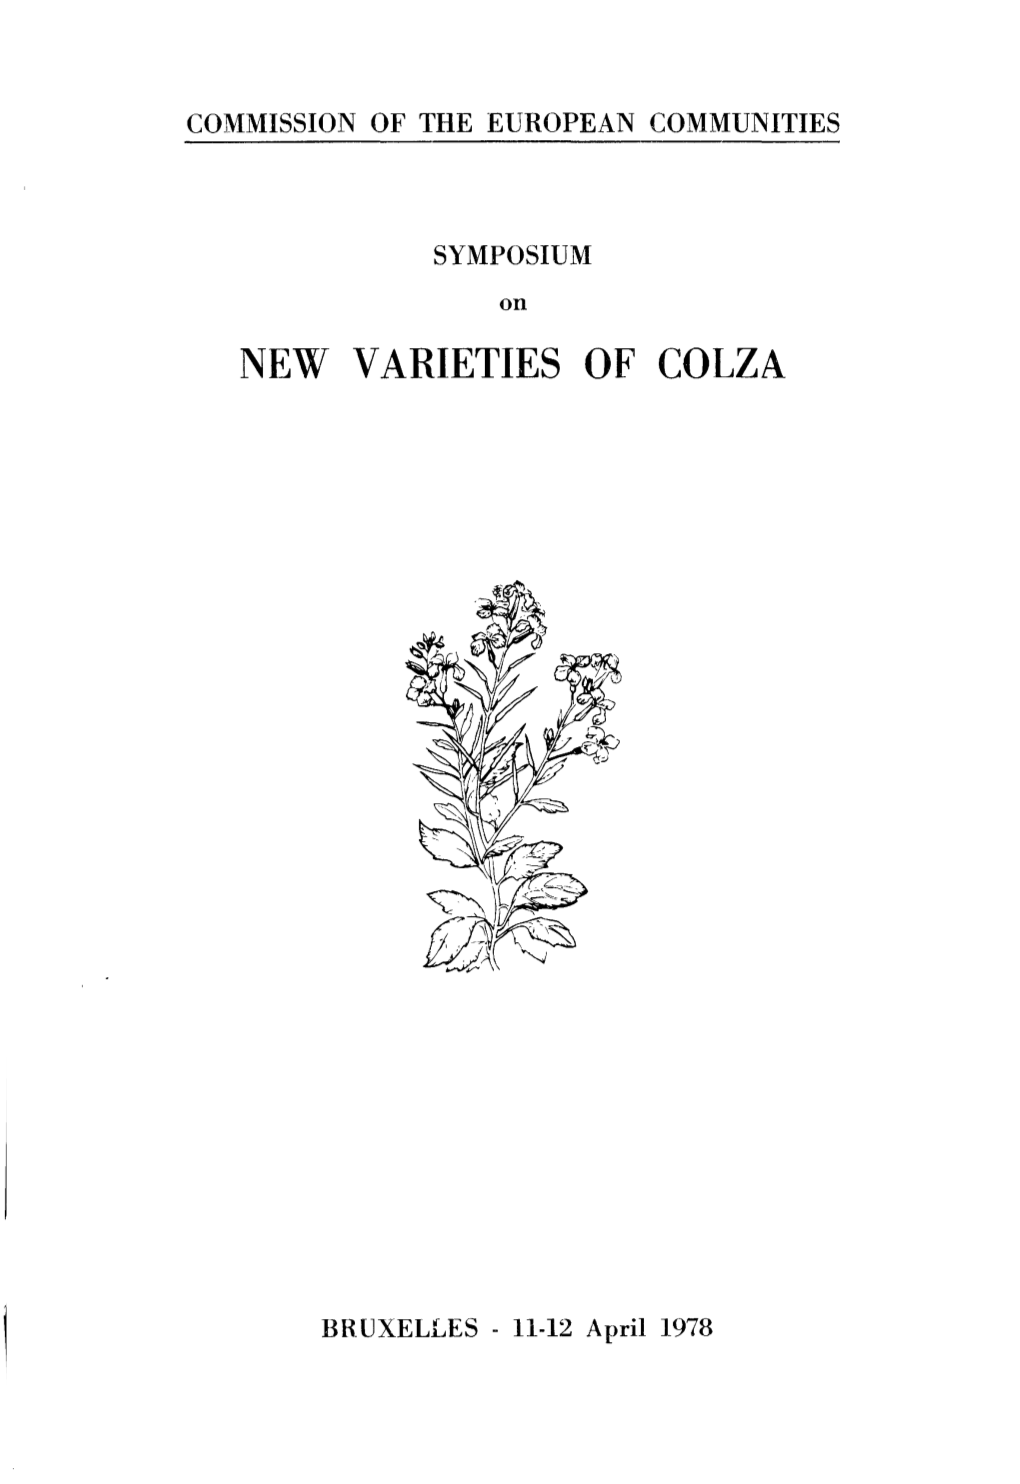 New Varieties of Colza